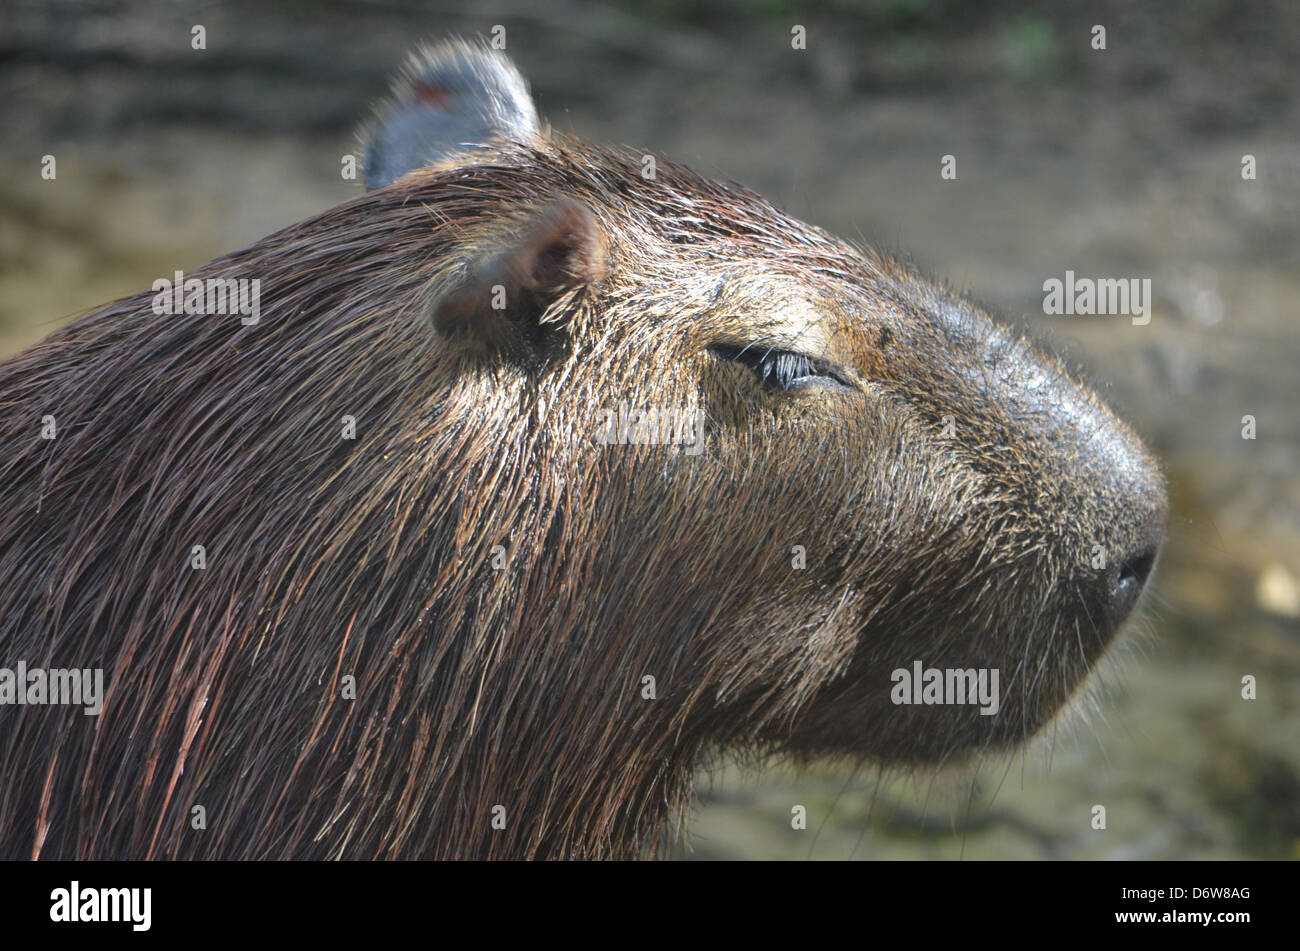 Capybara amazon river hi-res stock photography and images - Alamy